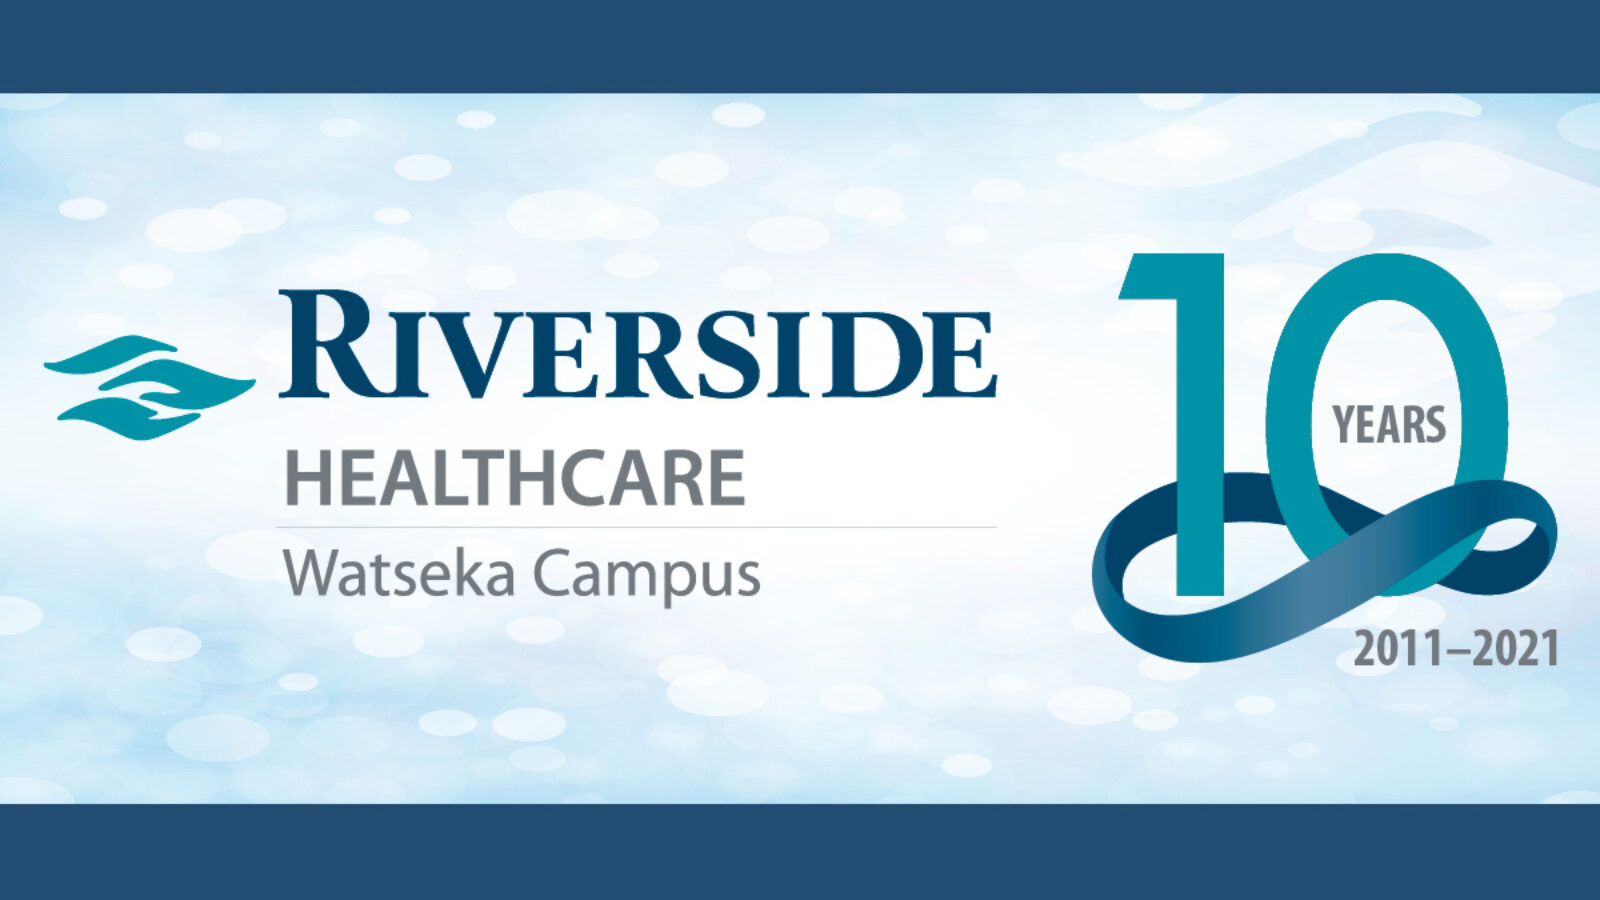 Riverside Healthcare’s Watseka Campus Celebrates 10 Years